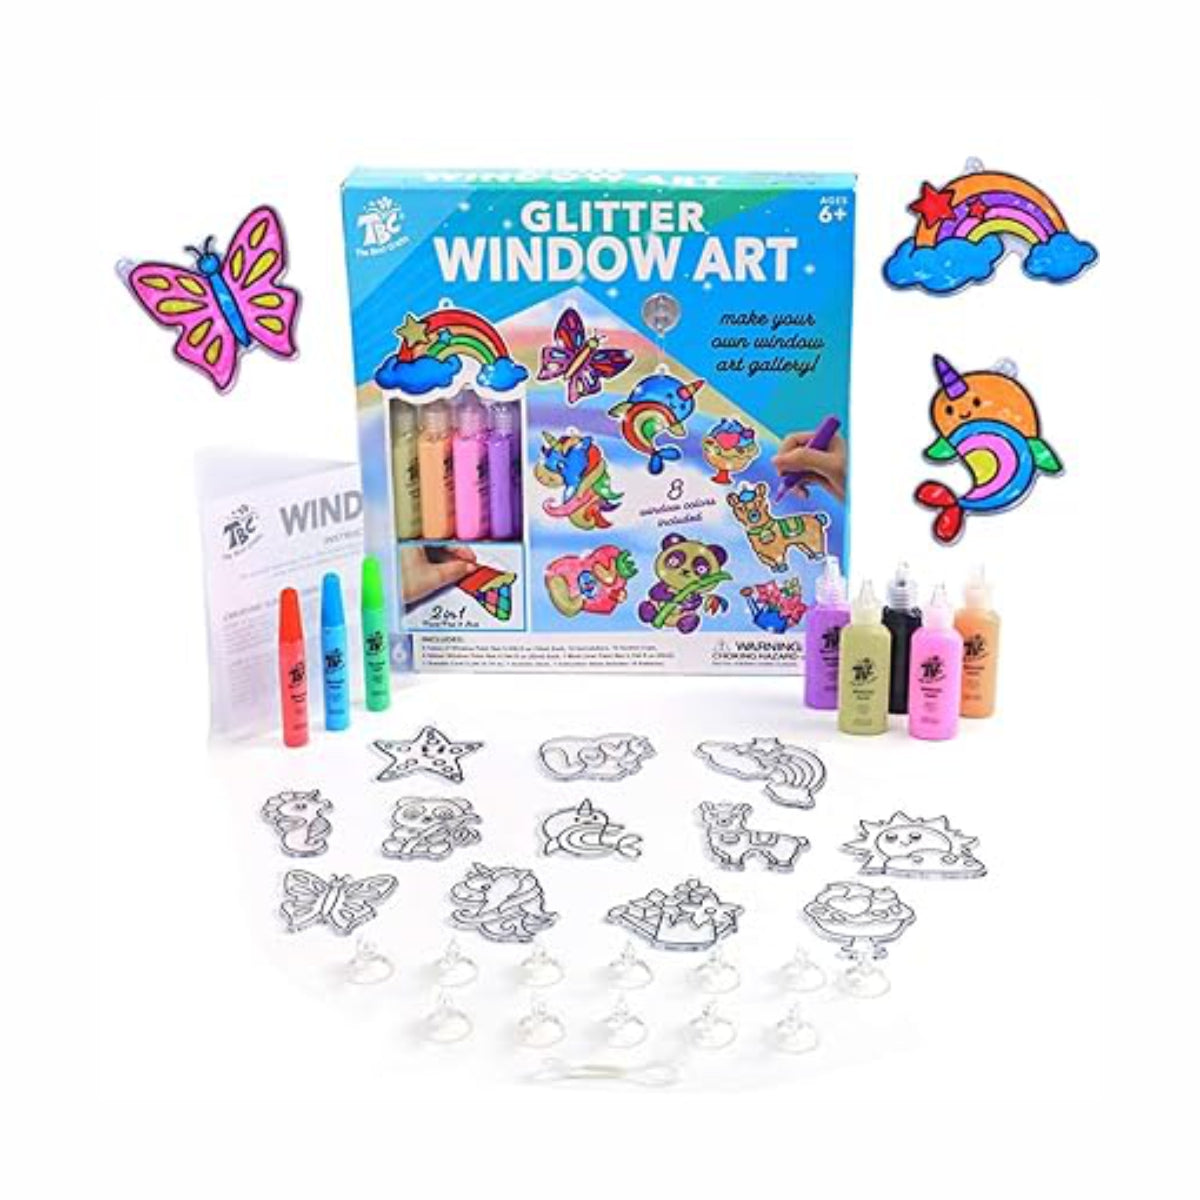 Glitter Window Art Kit